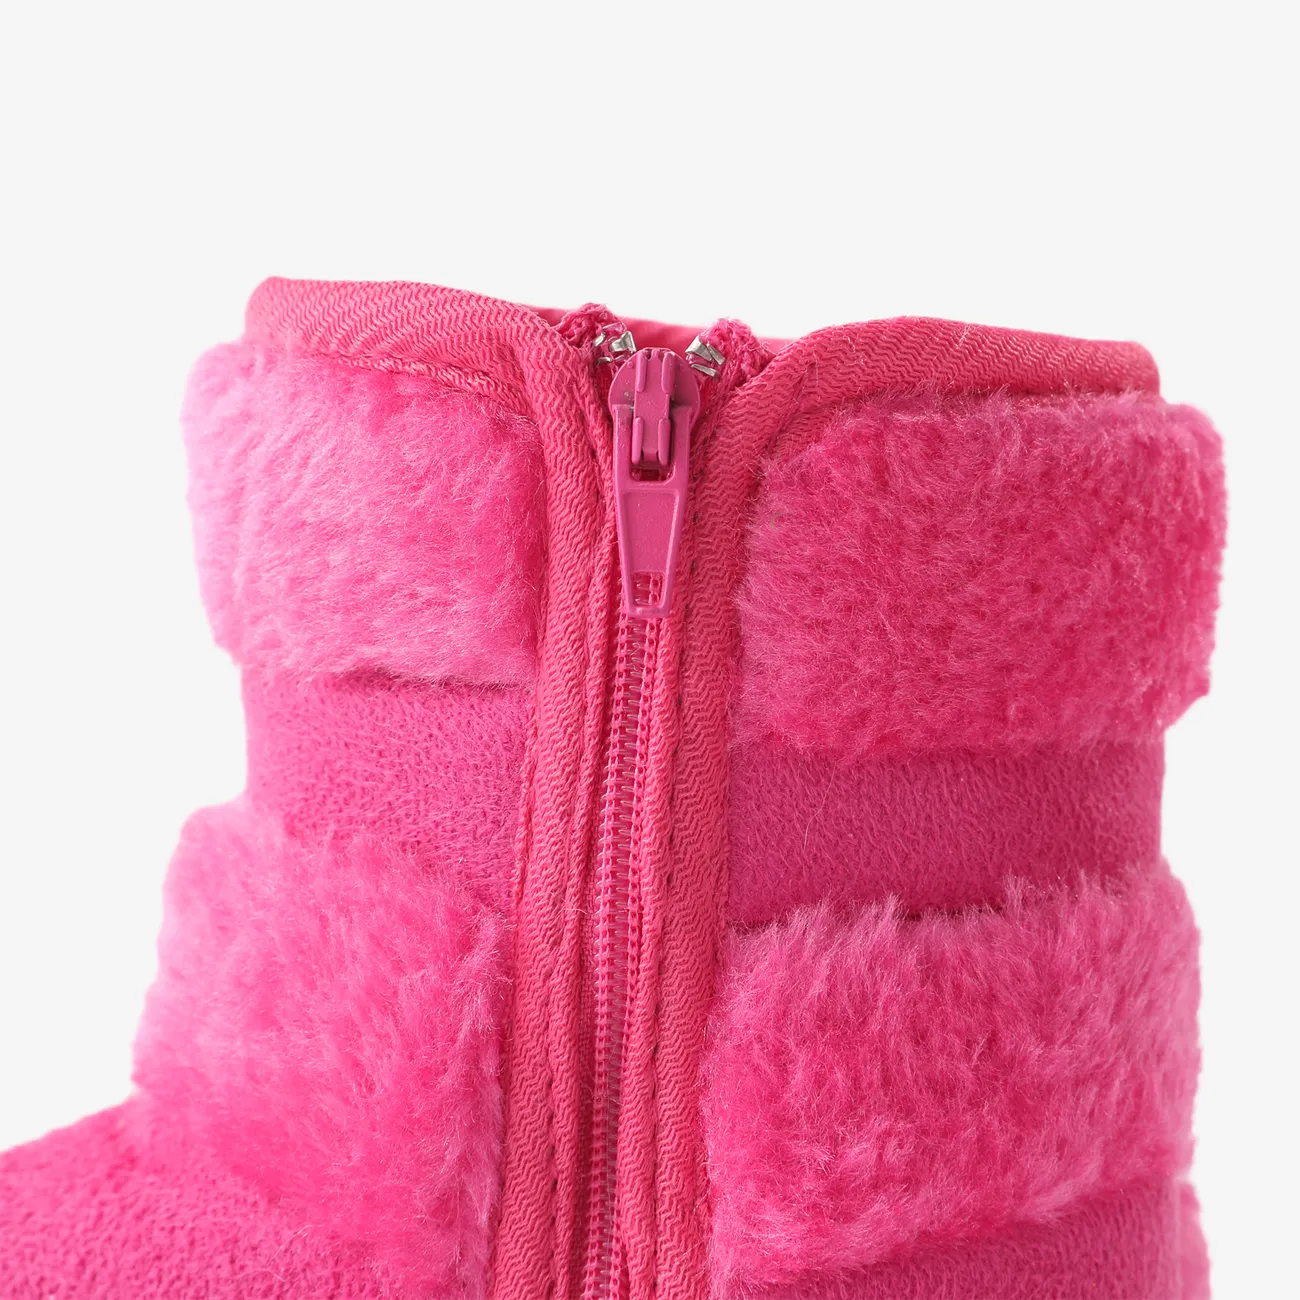 Toddler & Kids Pompom Decor Fleece Snow Boots Rosy big image 1